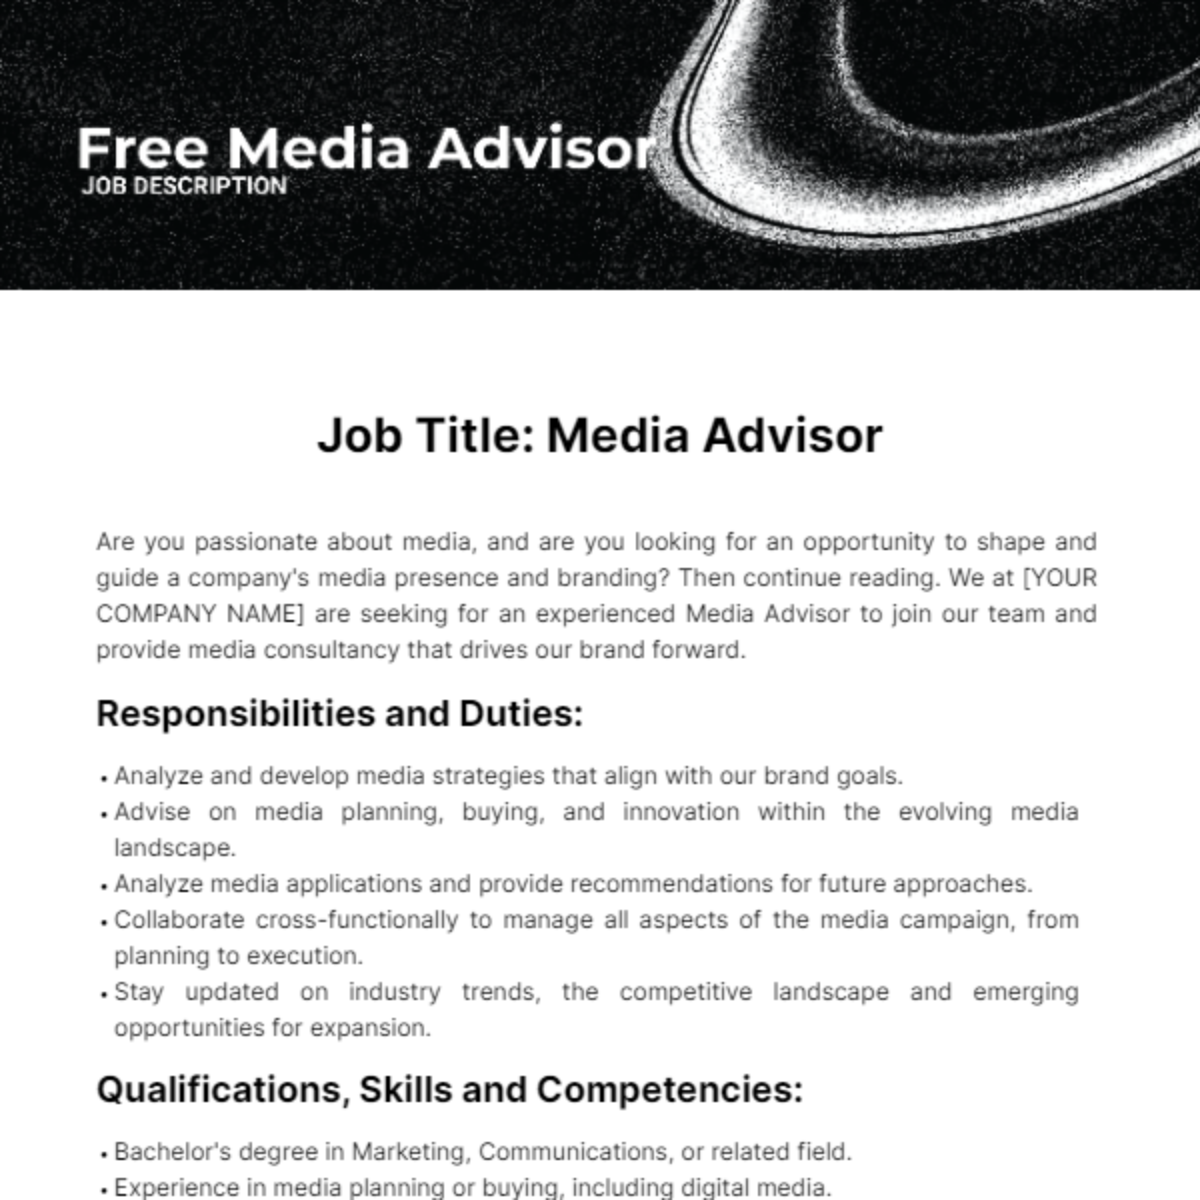 Free Media Advisor Job Description Template